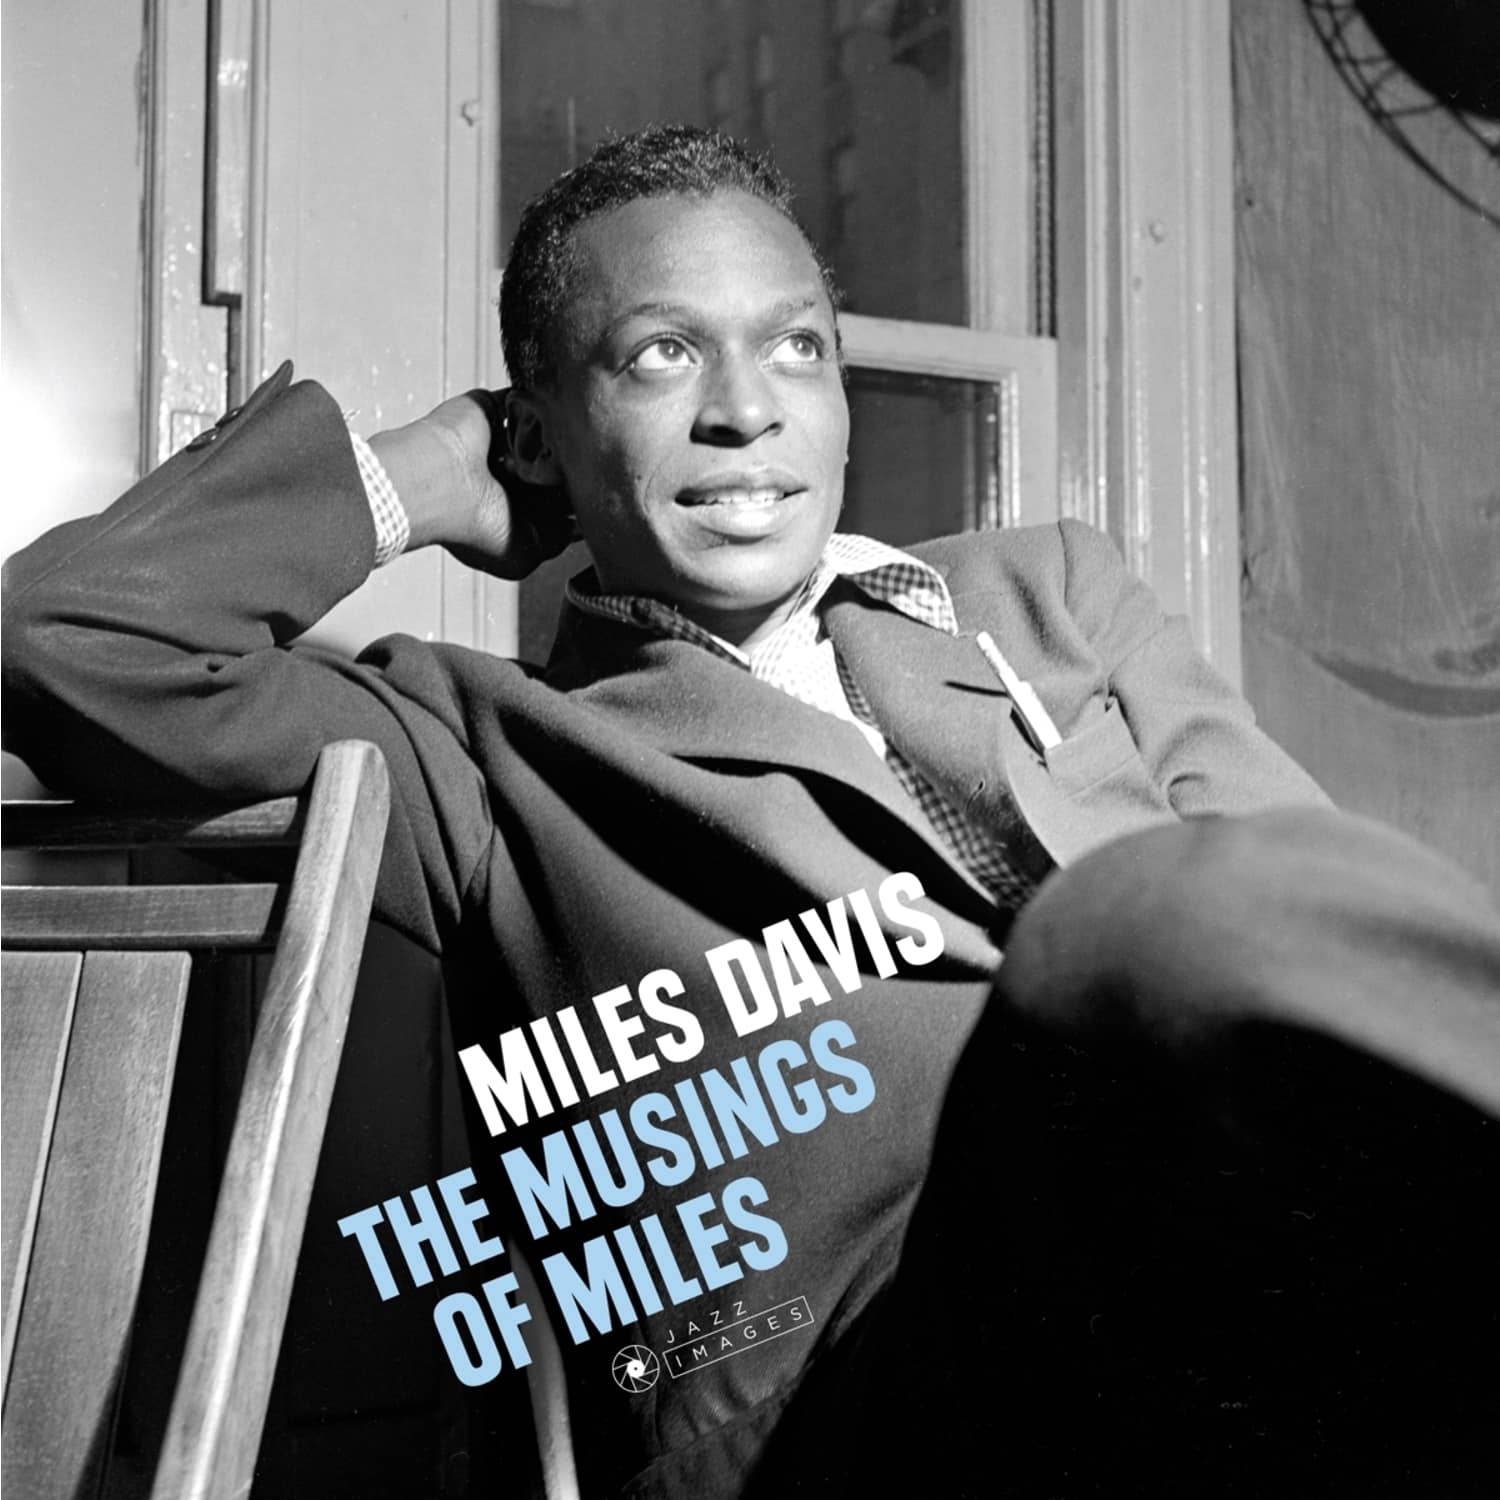 Miles Davis - THE MUSINGS OF MILES 